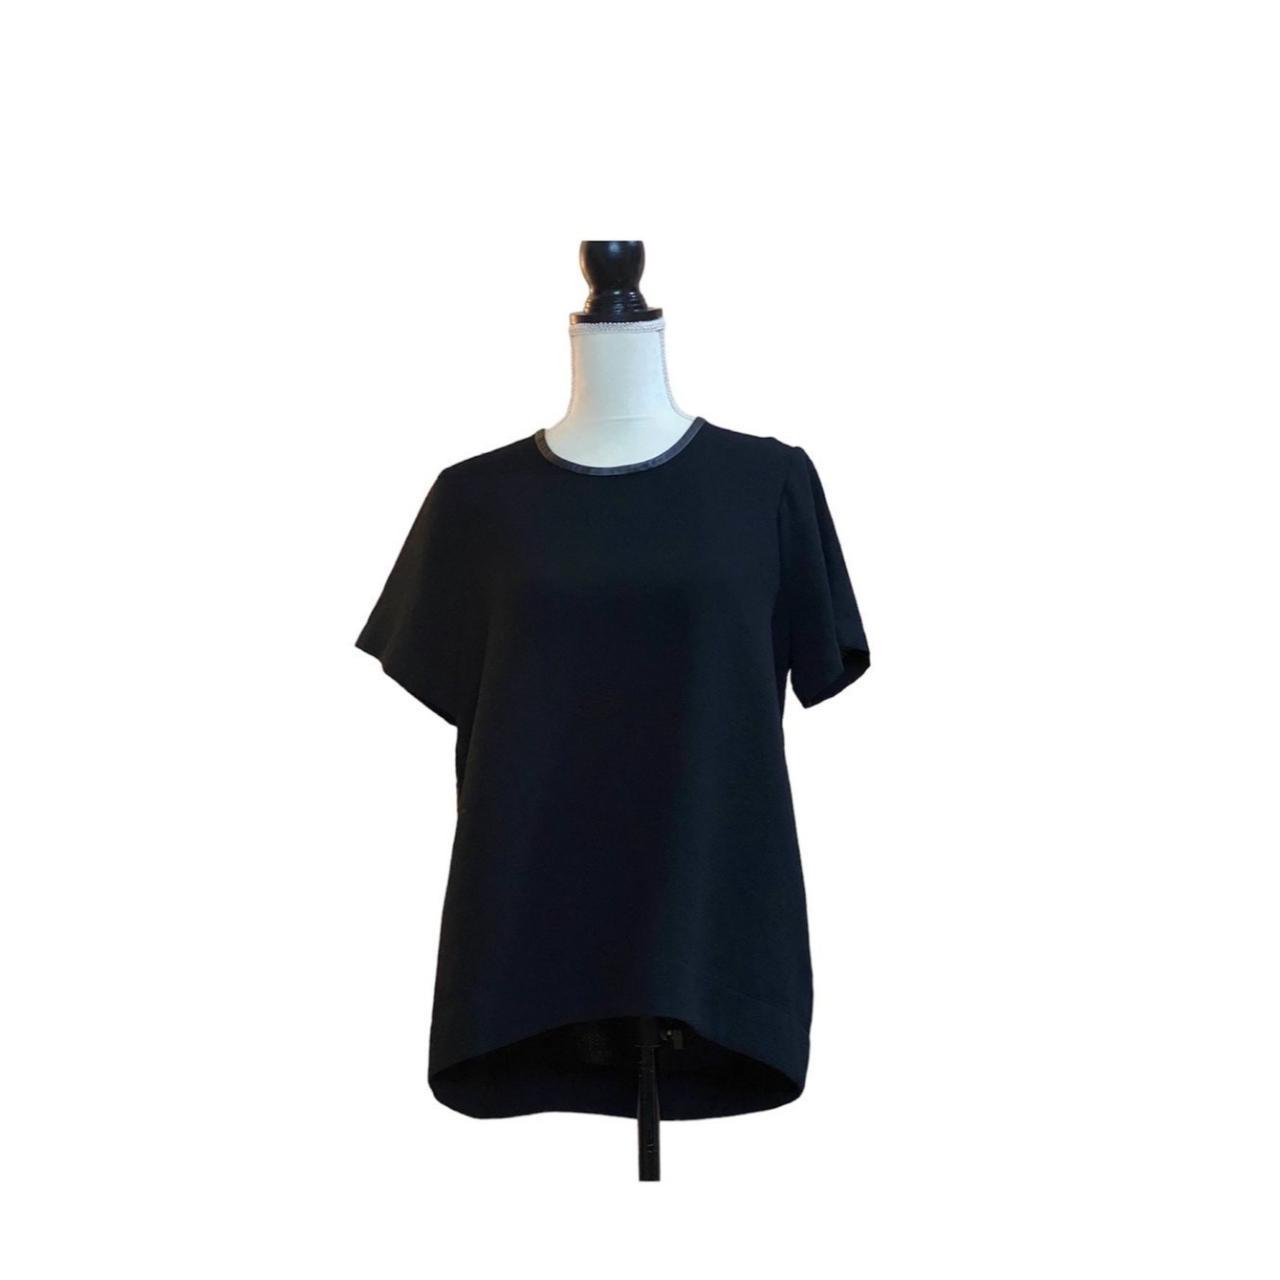 Madewell blouse black size L like new # - Depop